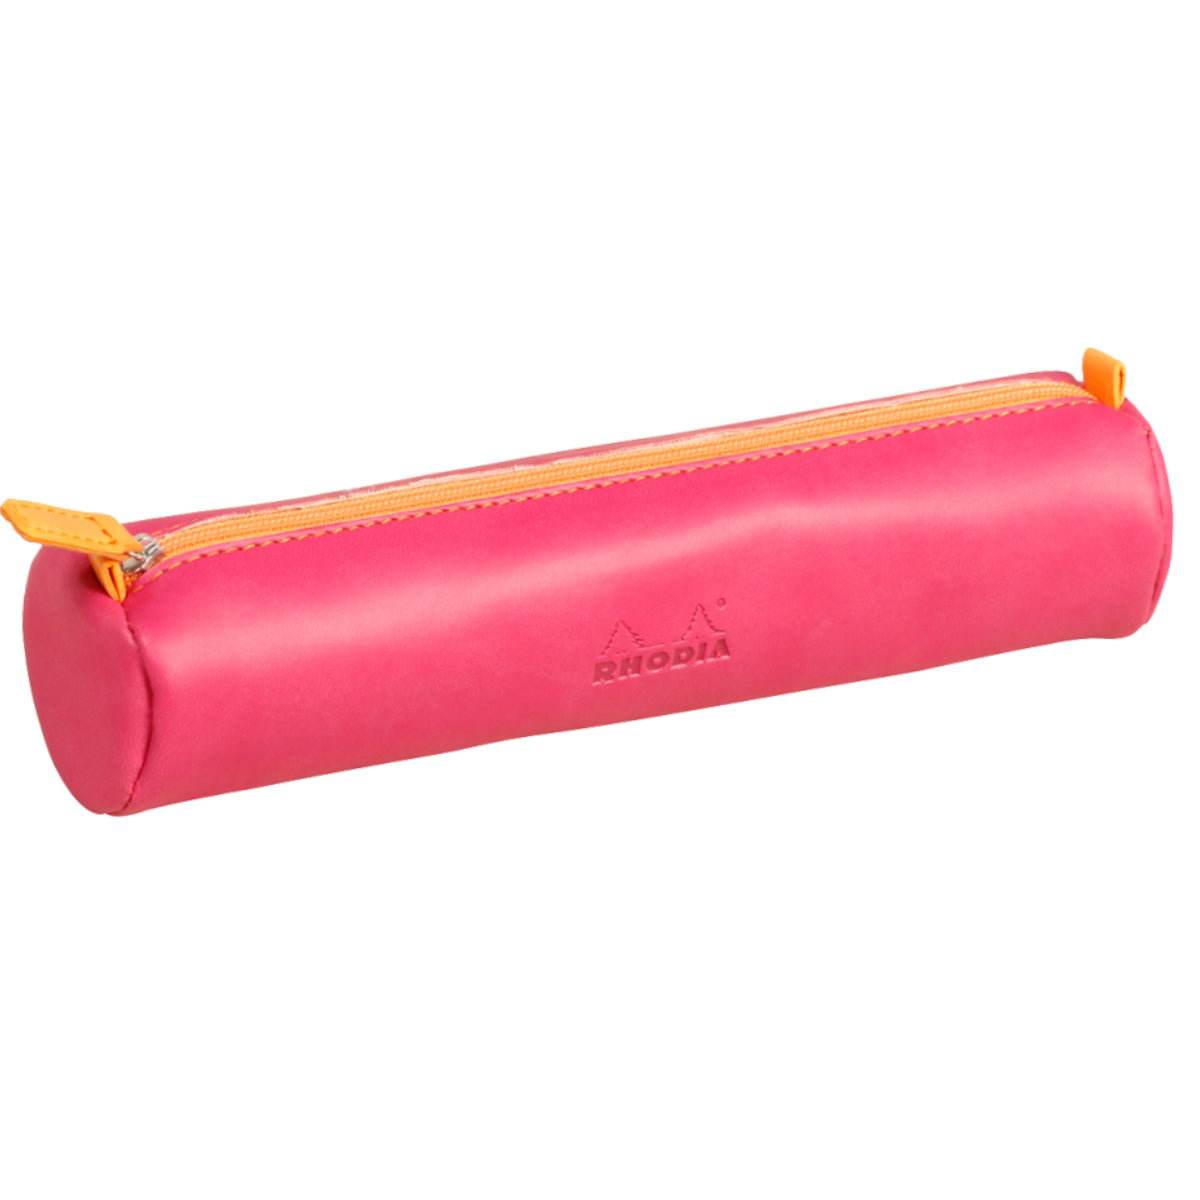 RHODIA rhodiarama Round Pencil Case with Zipper, PU Leather, 215 x 50 mm, Pink